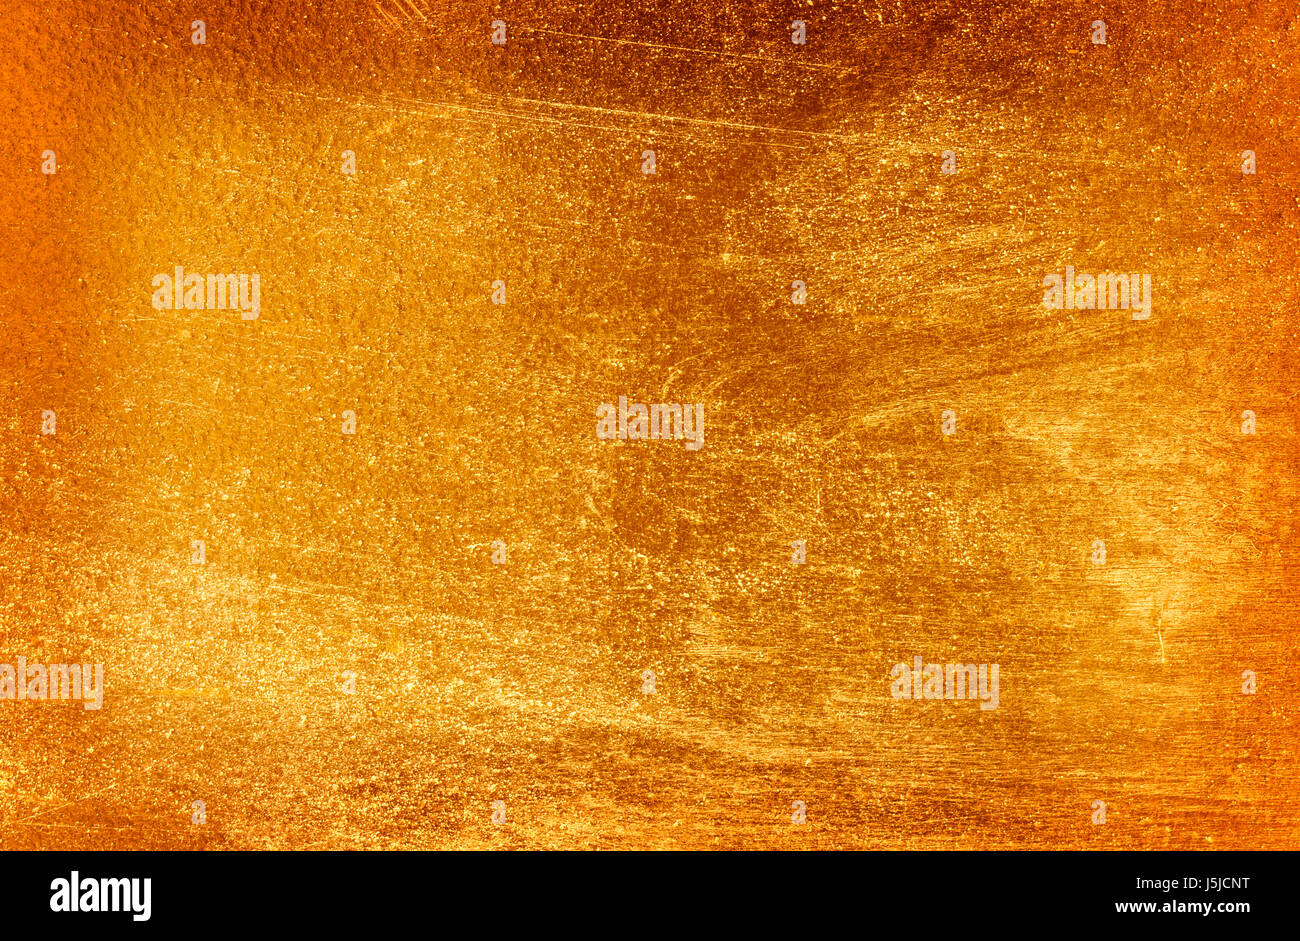 Feuille d'or feuille jaune brillant texture background Banque D'Images